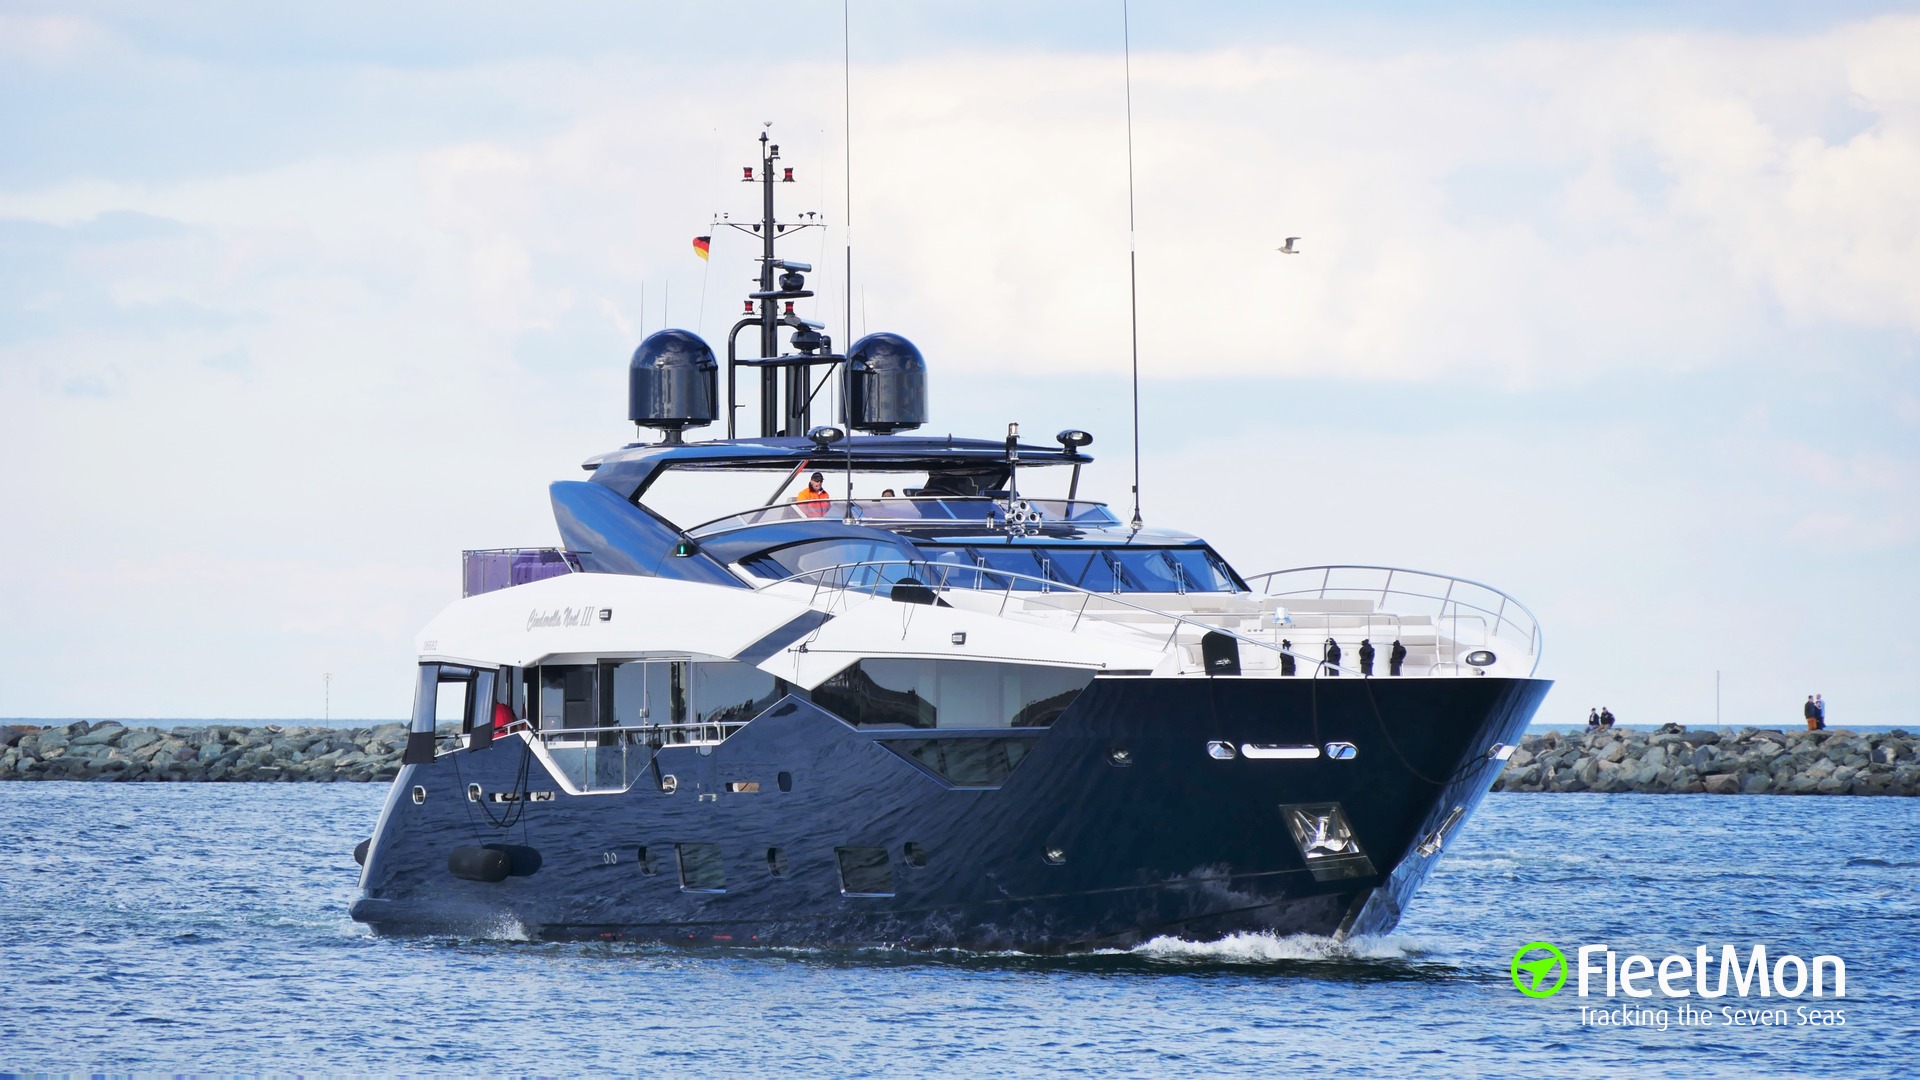 yacht cinderella noel 3 owner